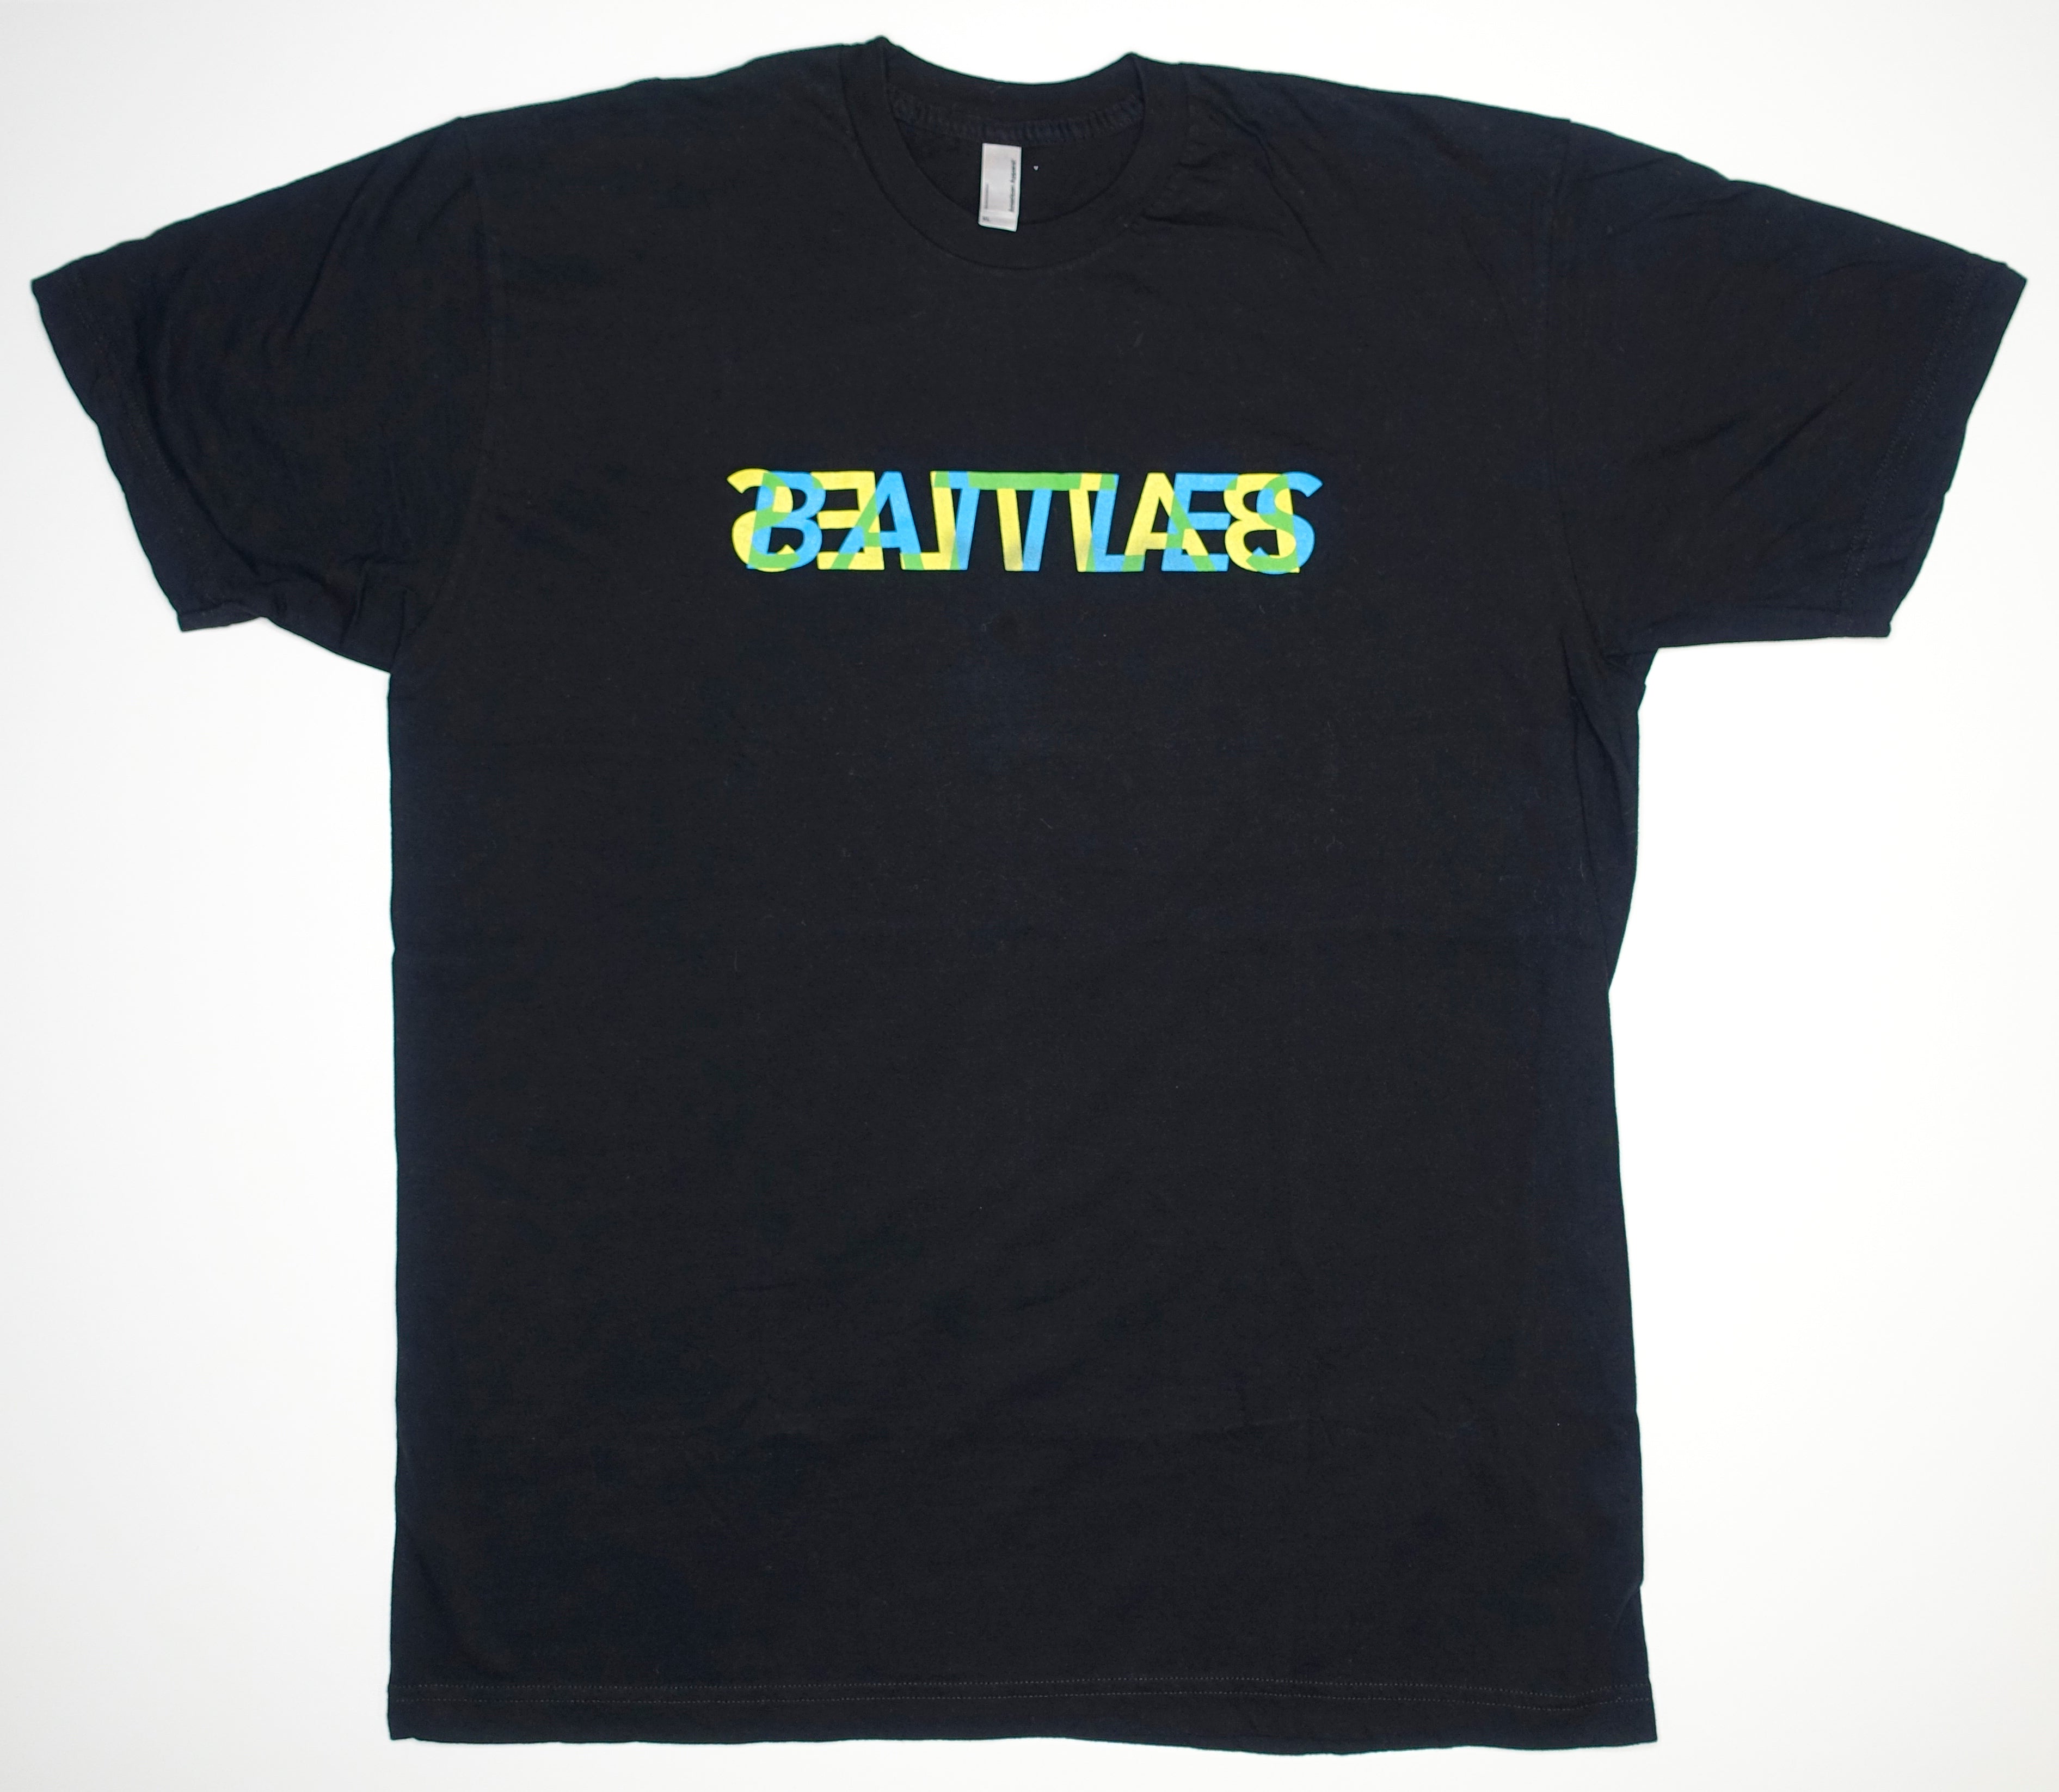 Battles - Mirrored Logo 2007 Tour Shirt Size XL / Large